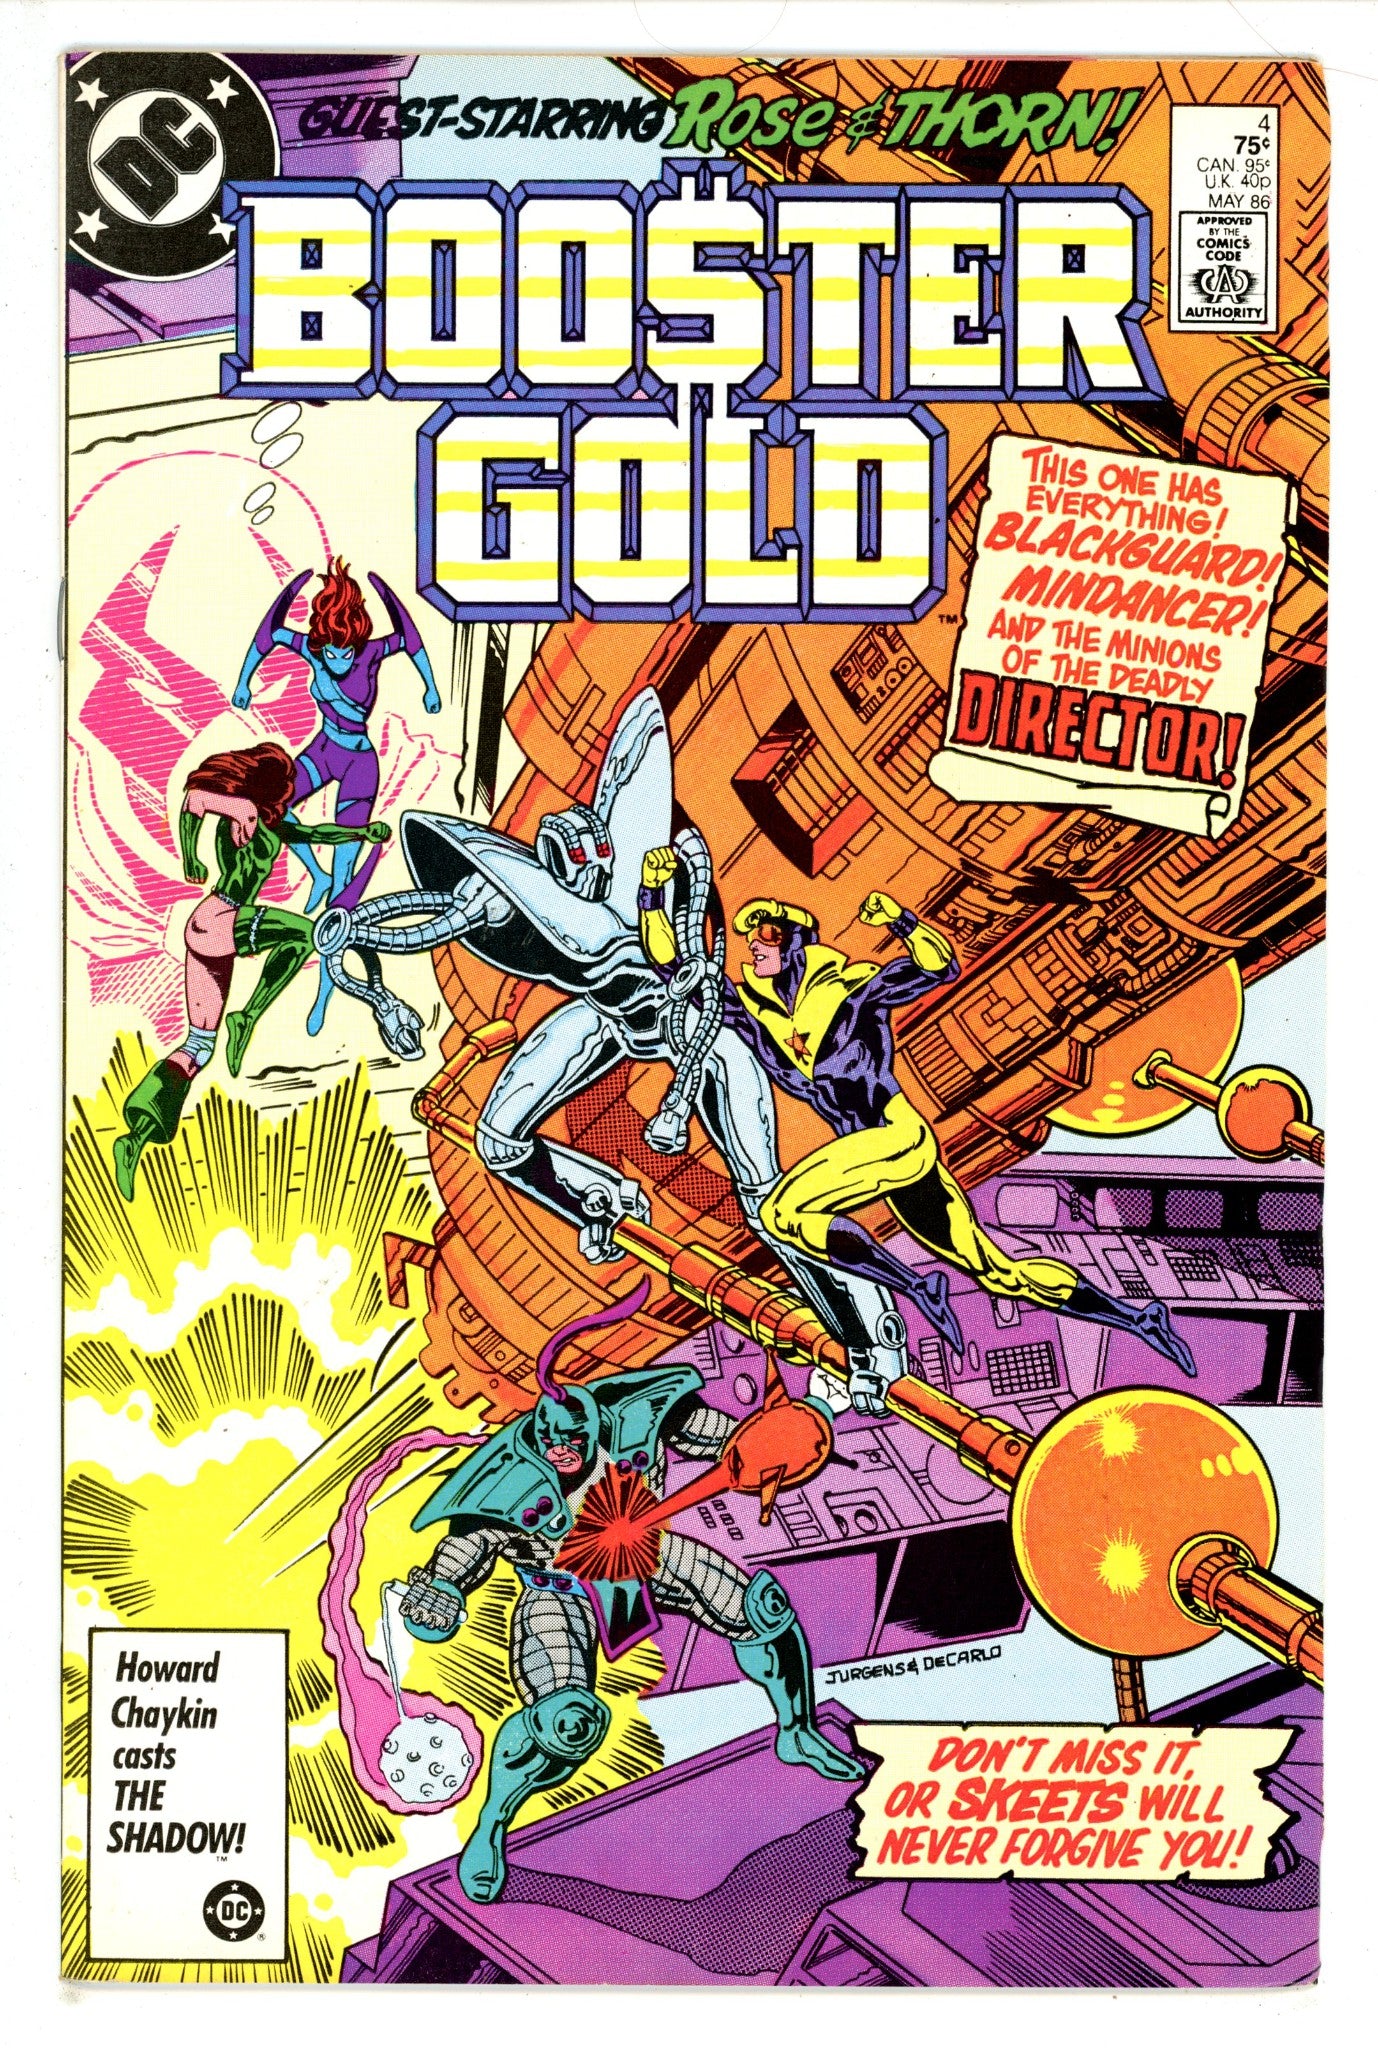 Booster Gold Vol 1 4 (1986)